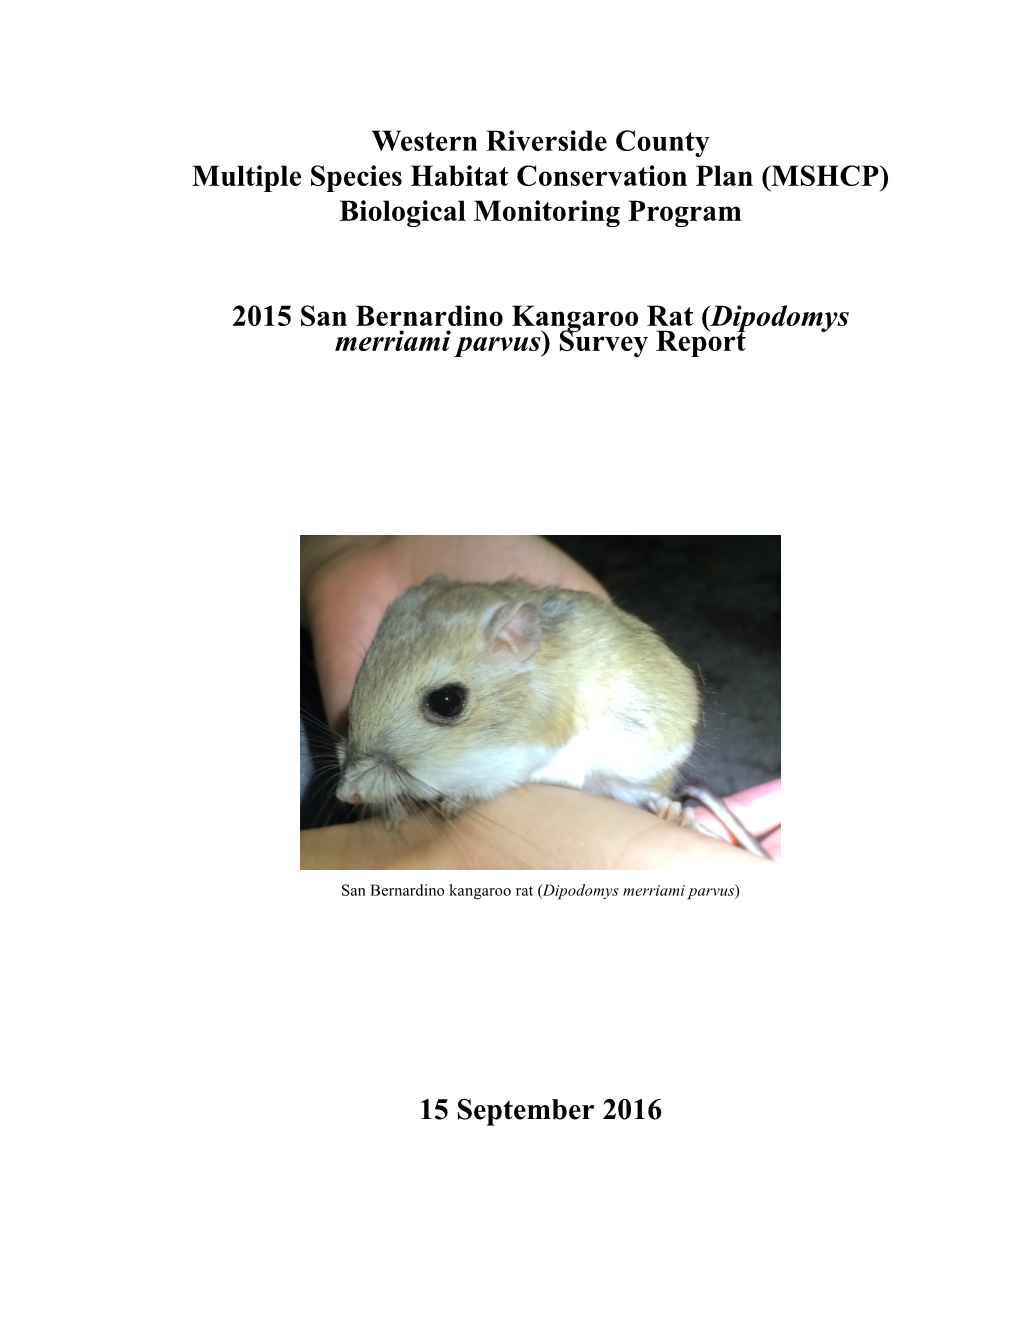 Western Riverside County Multiple Species Habitat Conservation Plan (MSHCP) Biological Monitoring Program